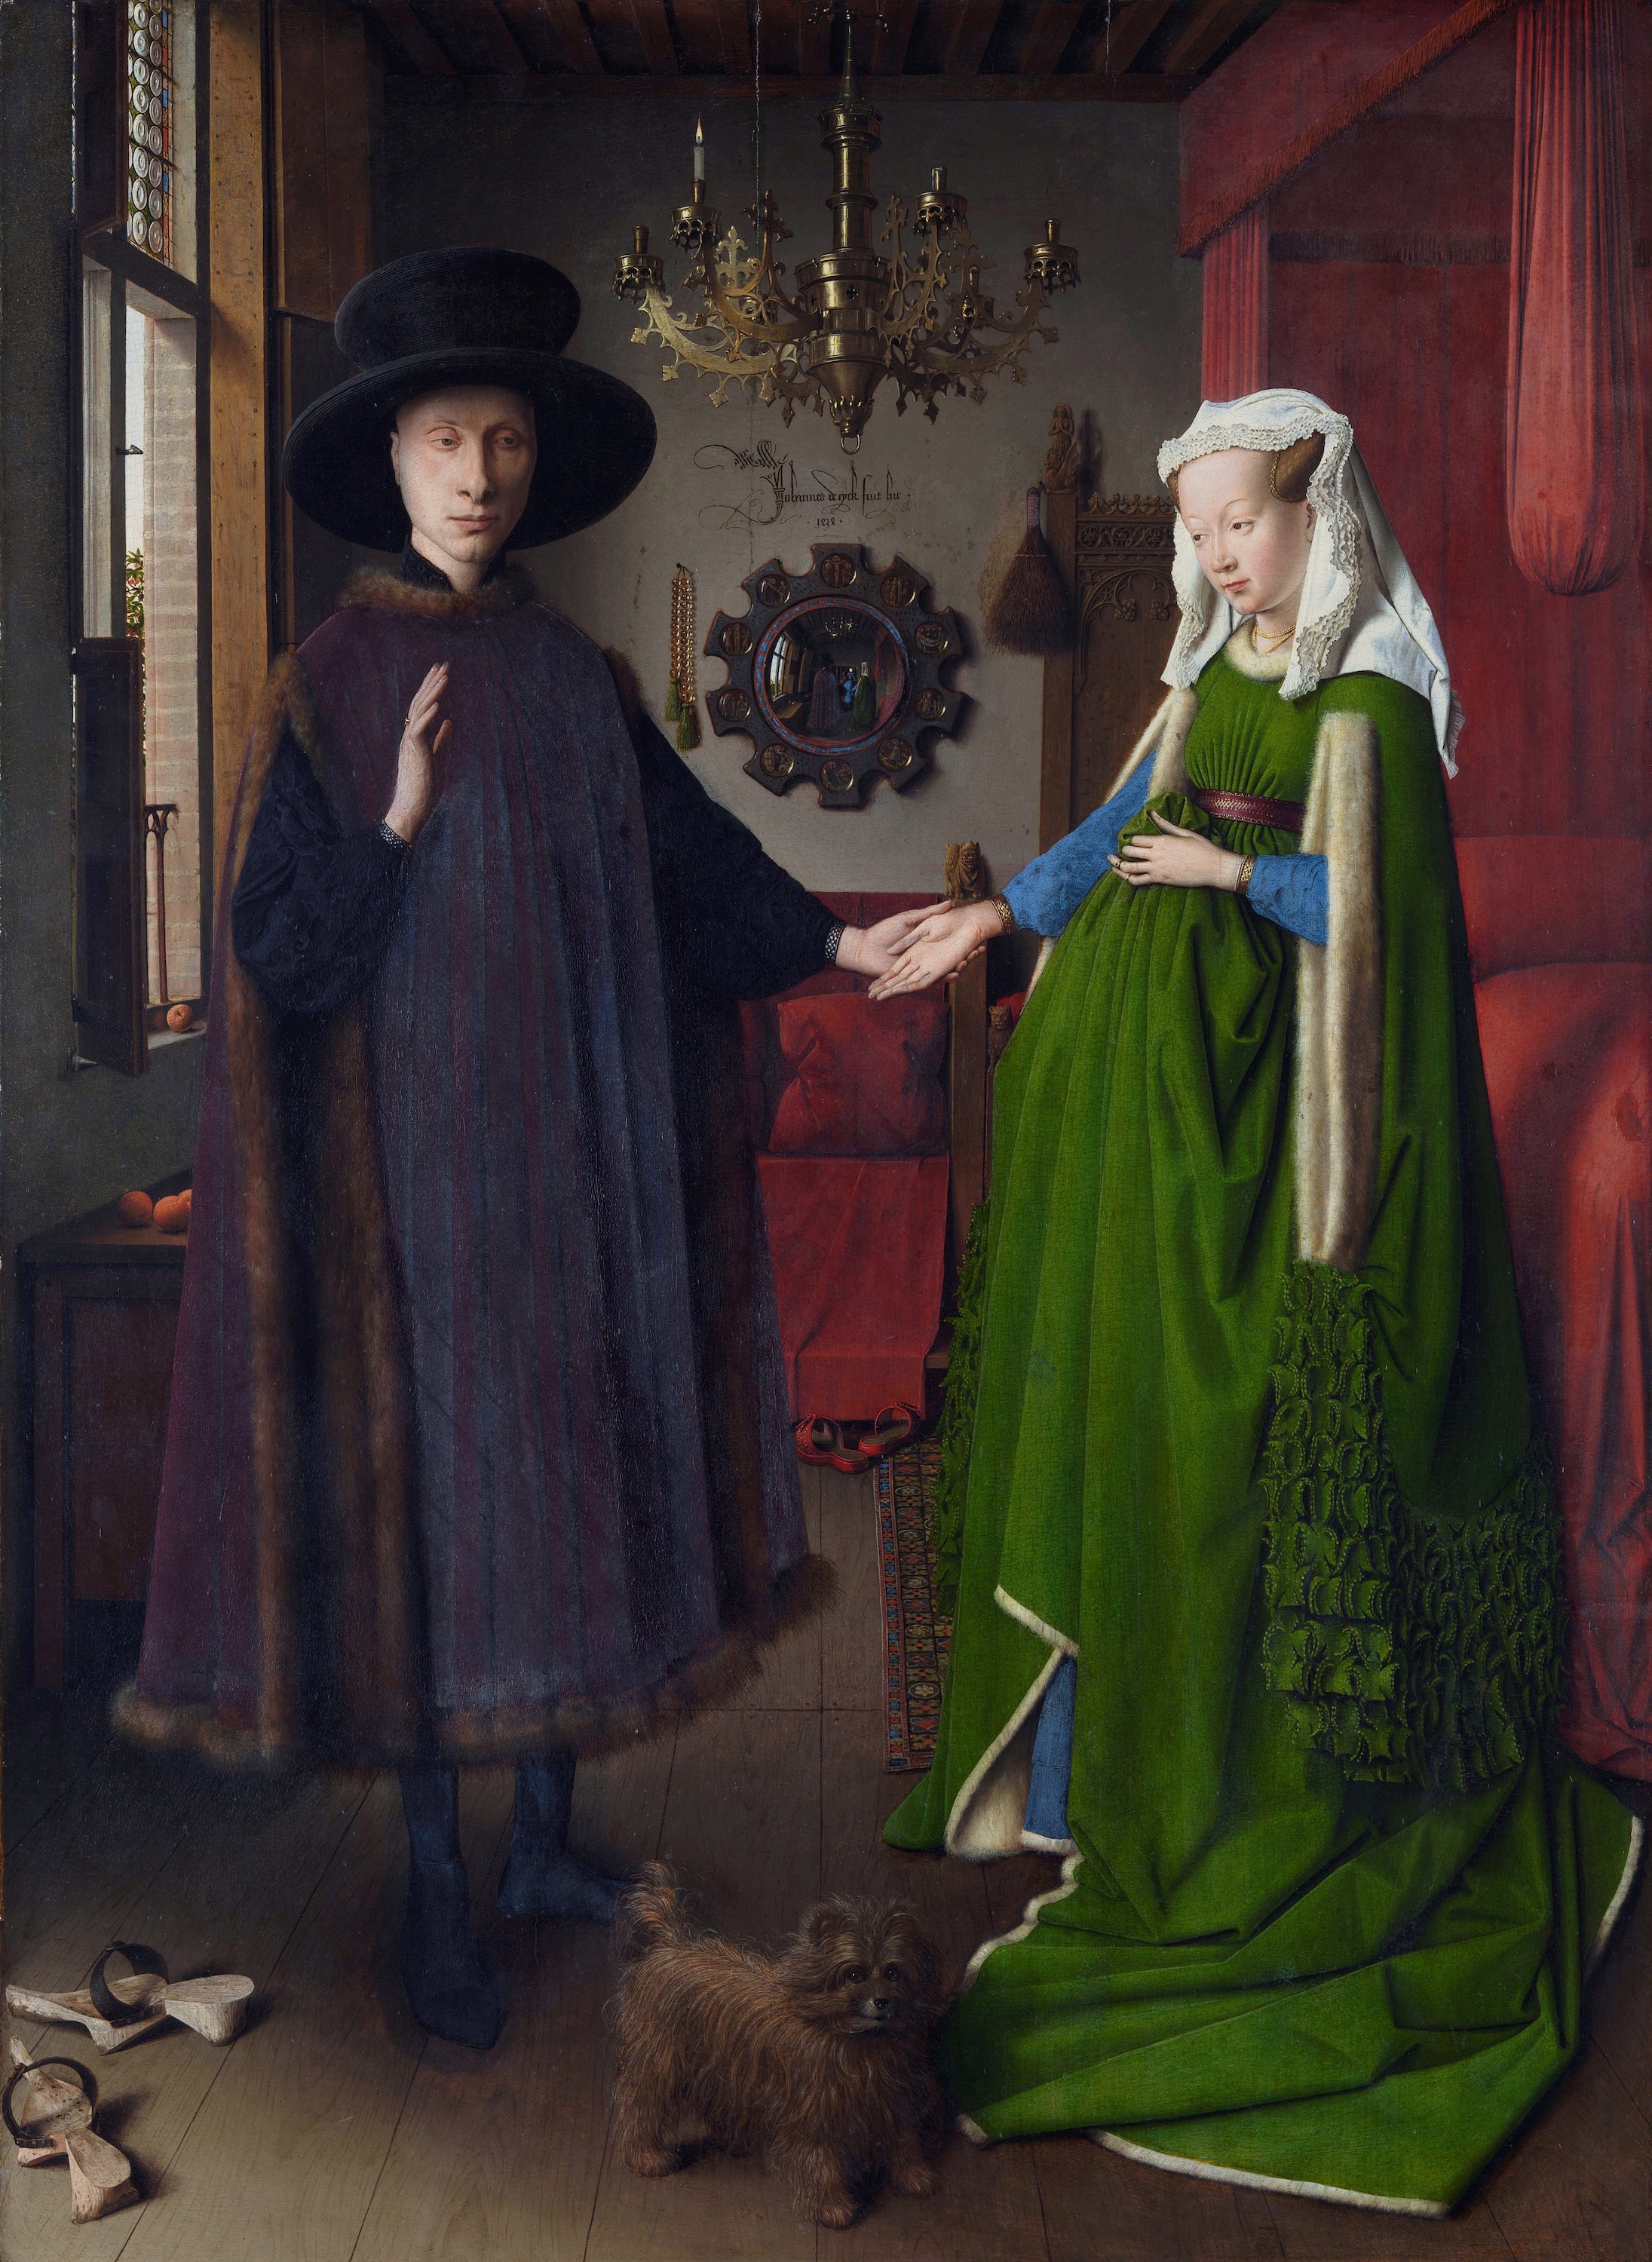 The Arnolfini Portrait by Jan van Eyck - 1434 - 82 x 60 cm National Gallery